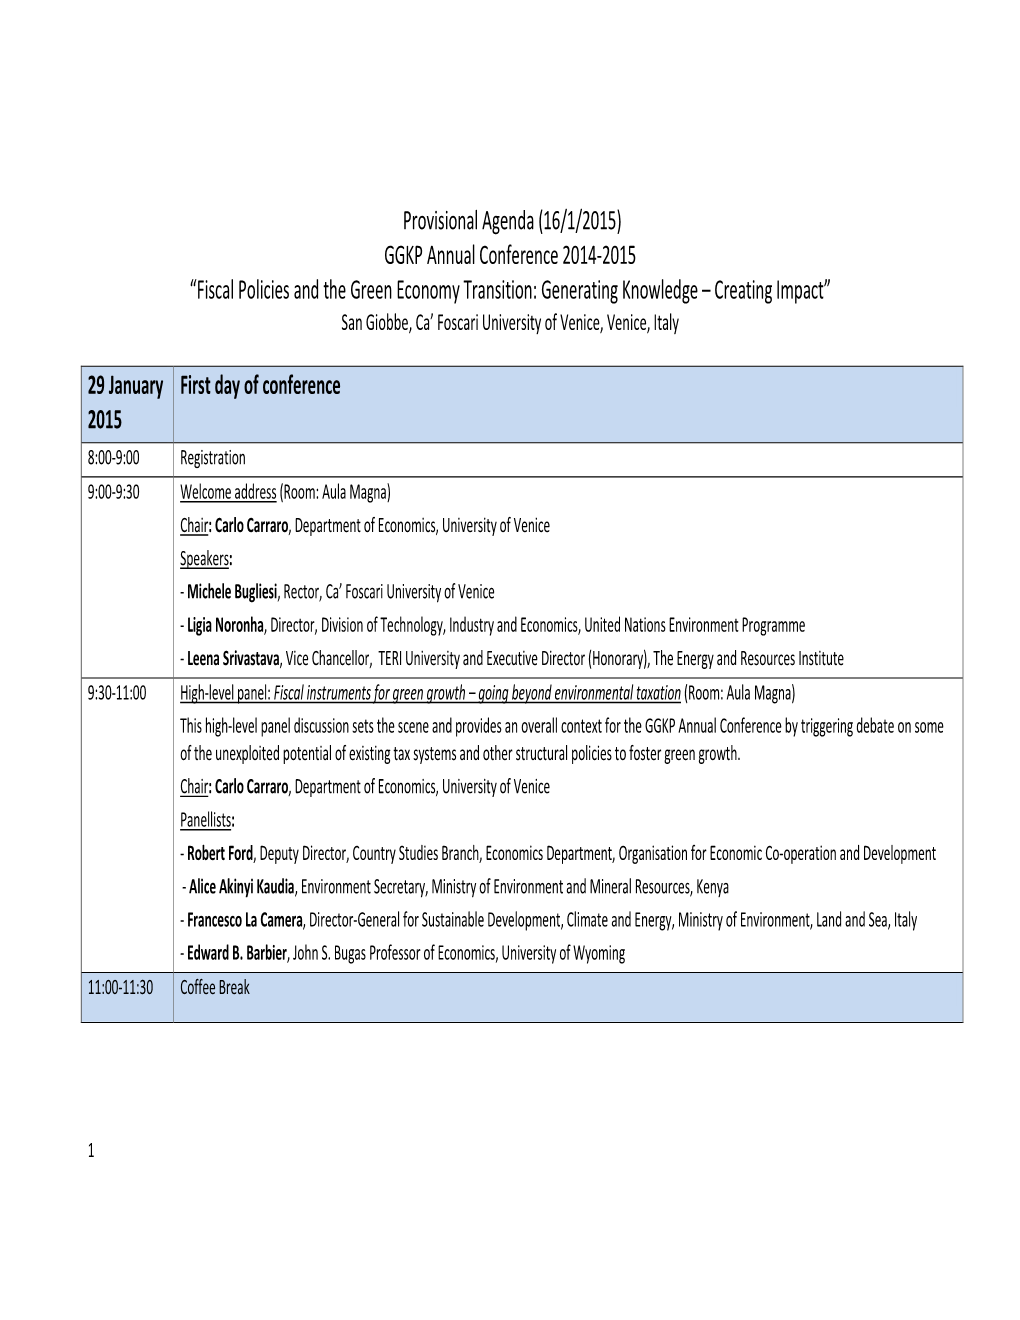 Provisional Agenda (16/1/2015) GGKP Annual Conference 2014